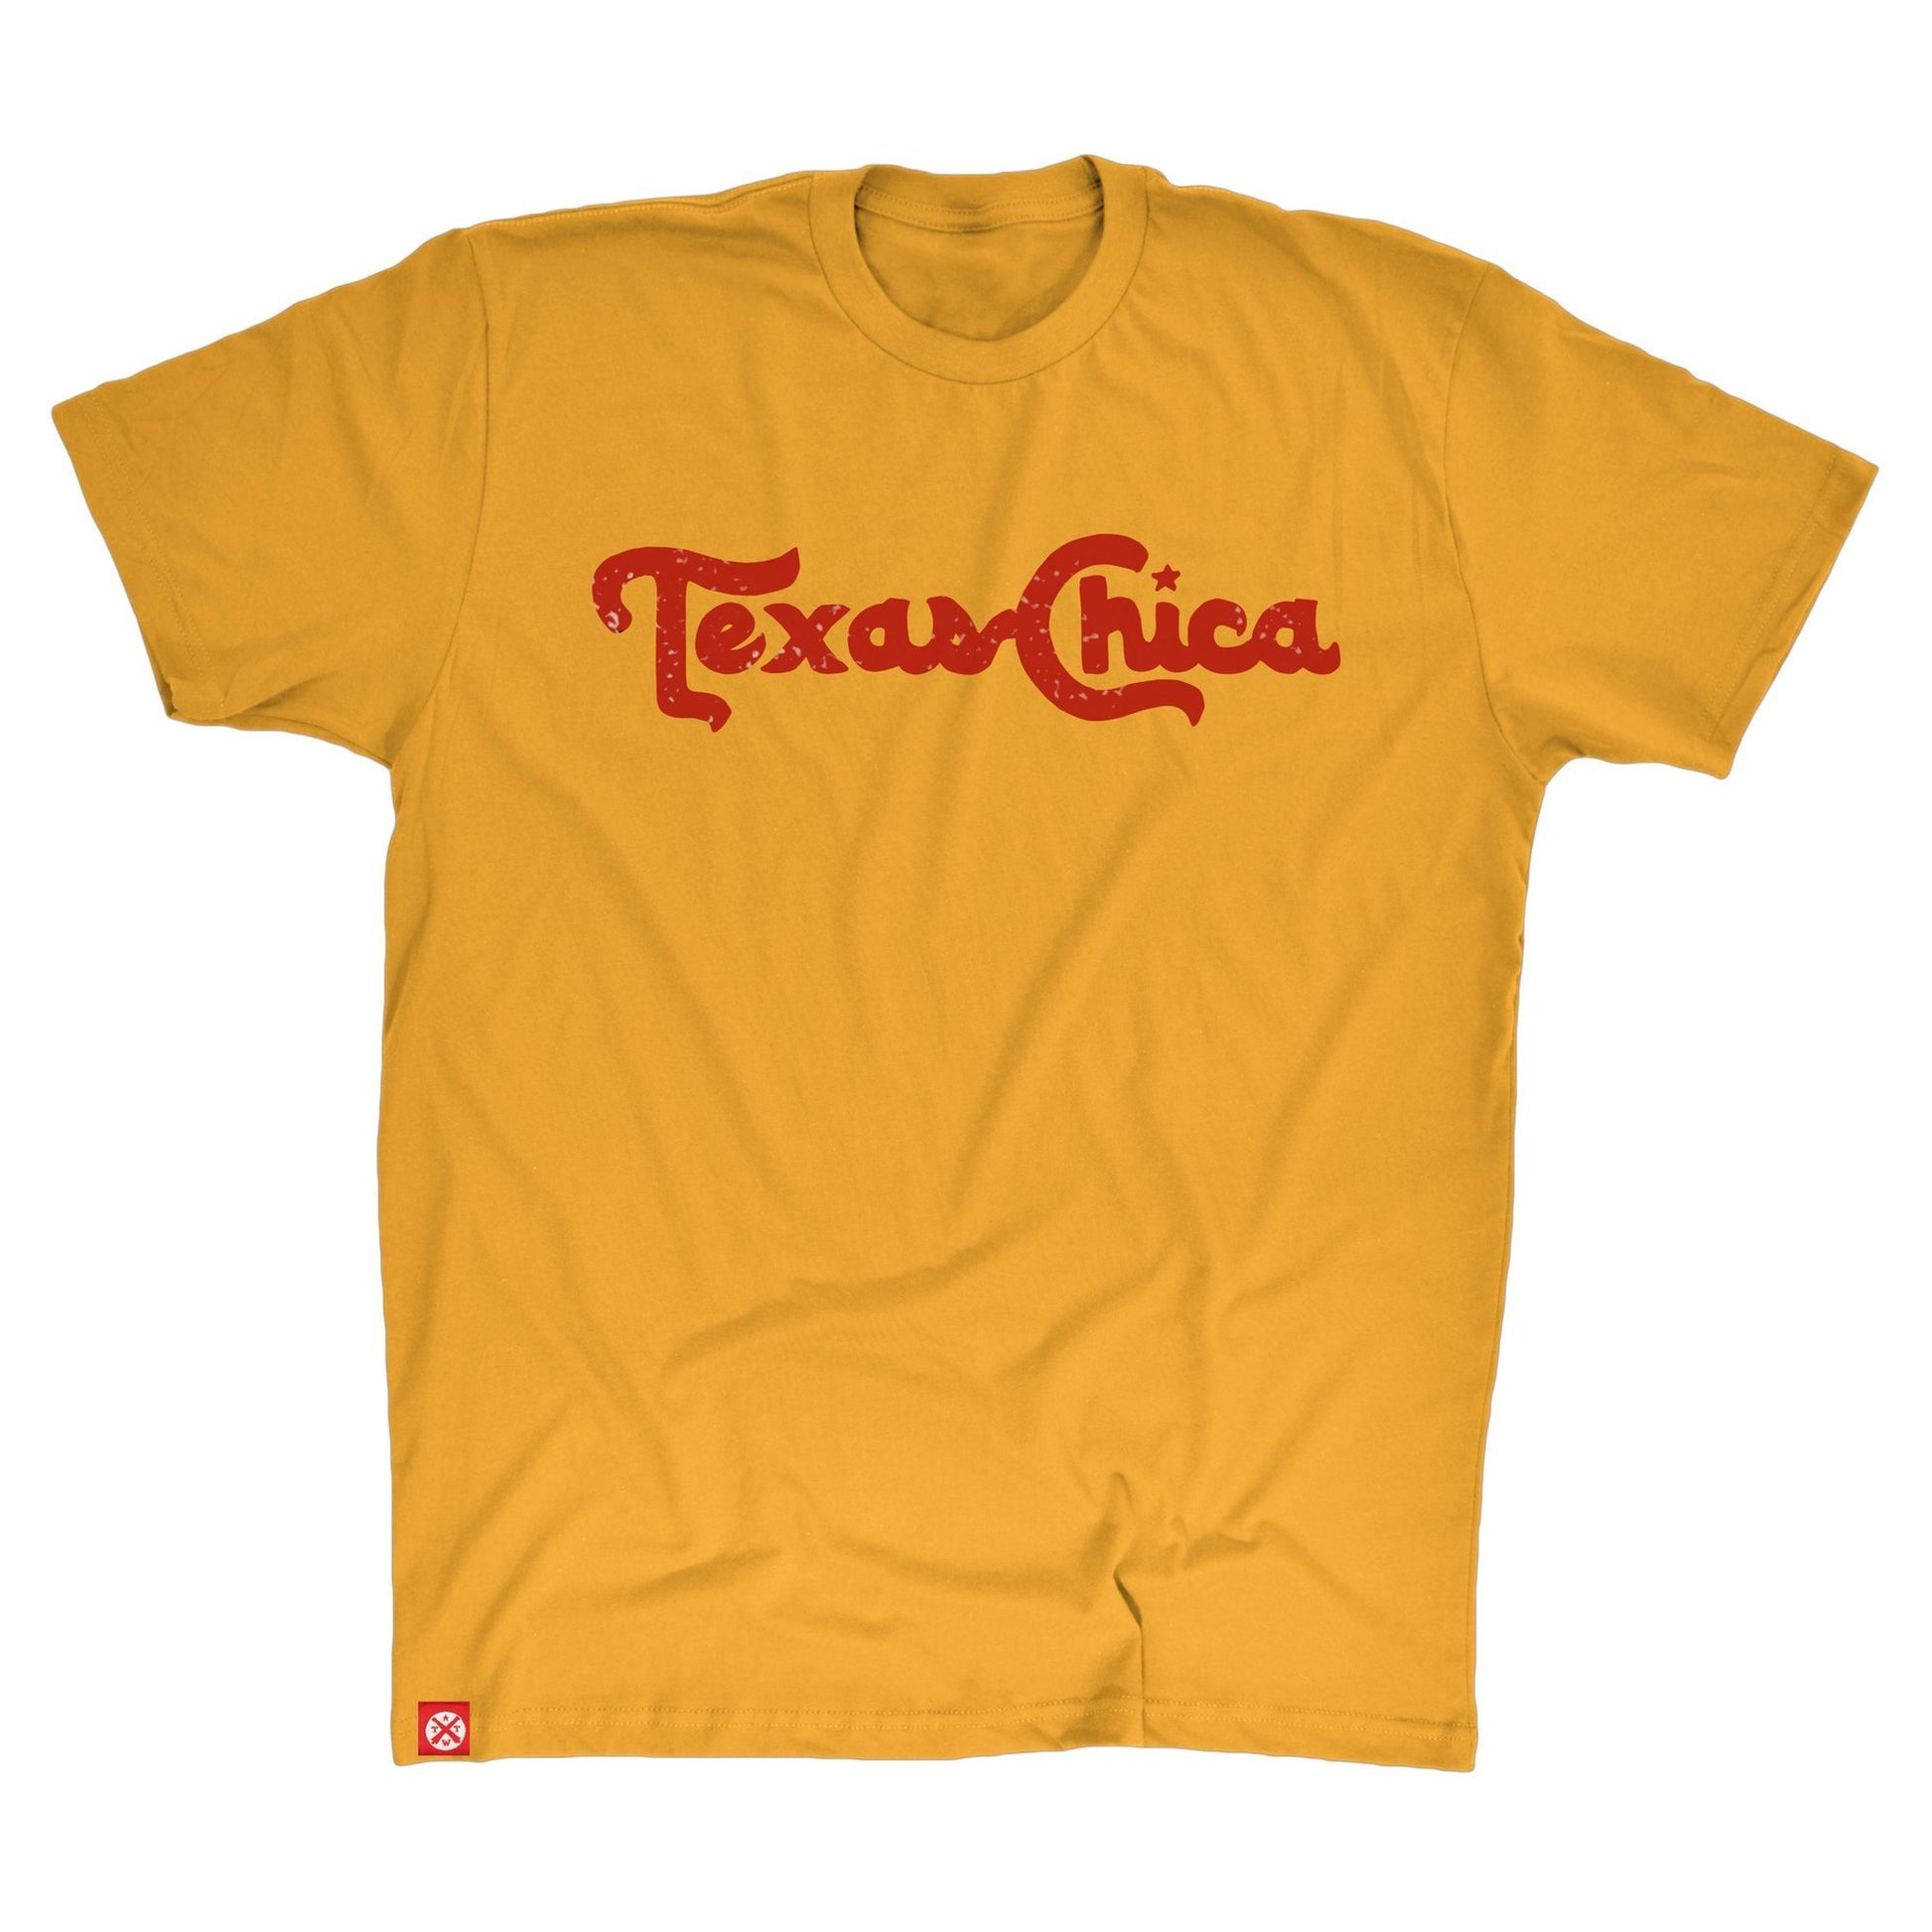 Texas Chica Gold T-shirt